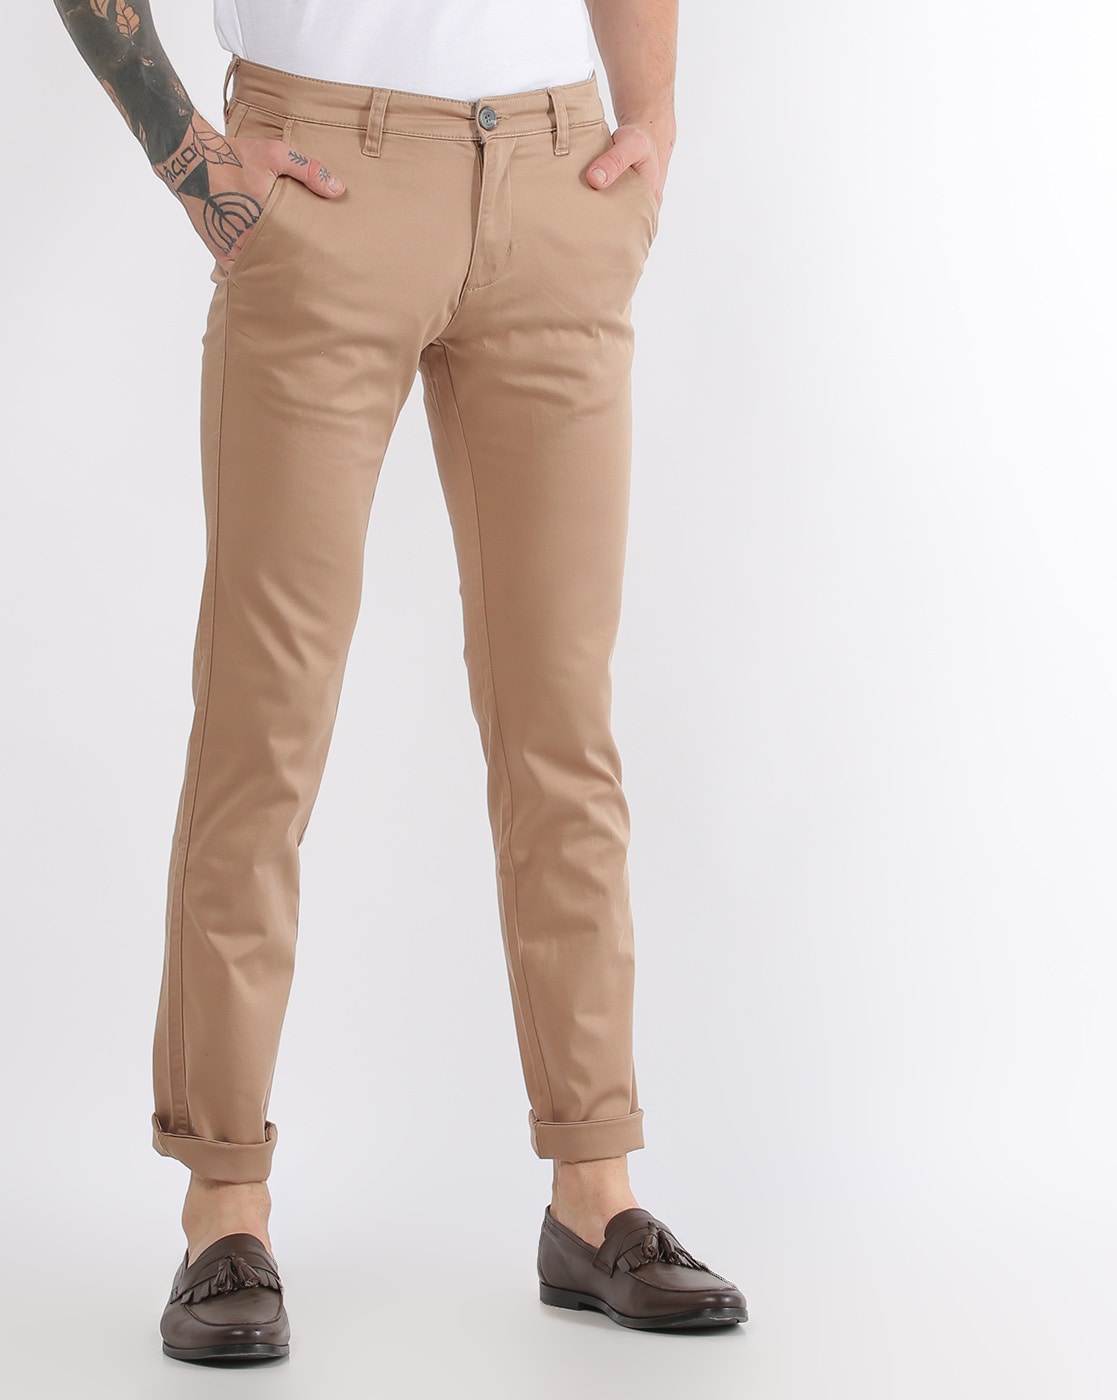 Buy Khaki Trousers  Pants for Men by Giordano Online  Ajiocom